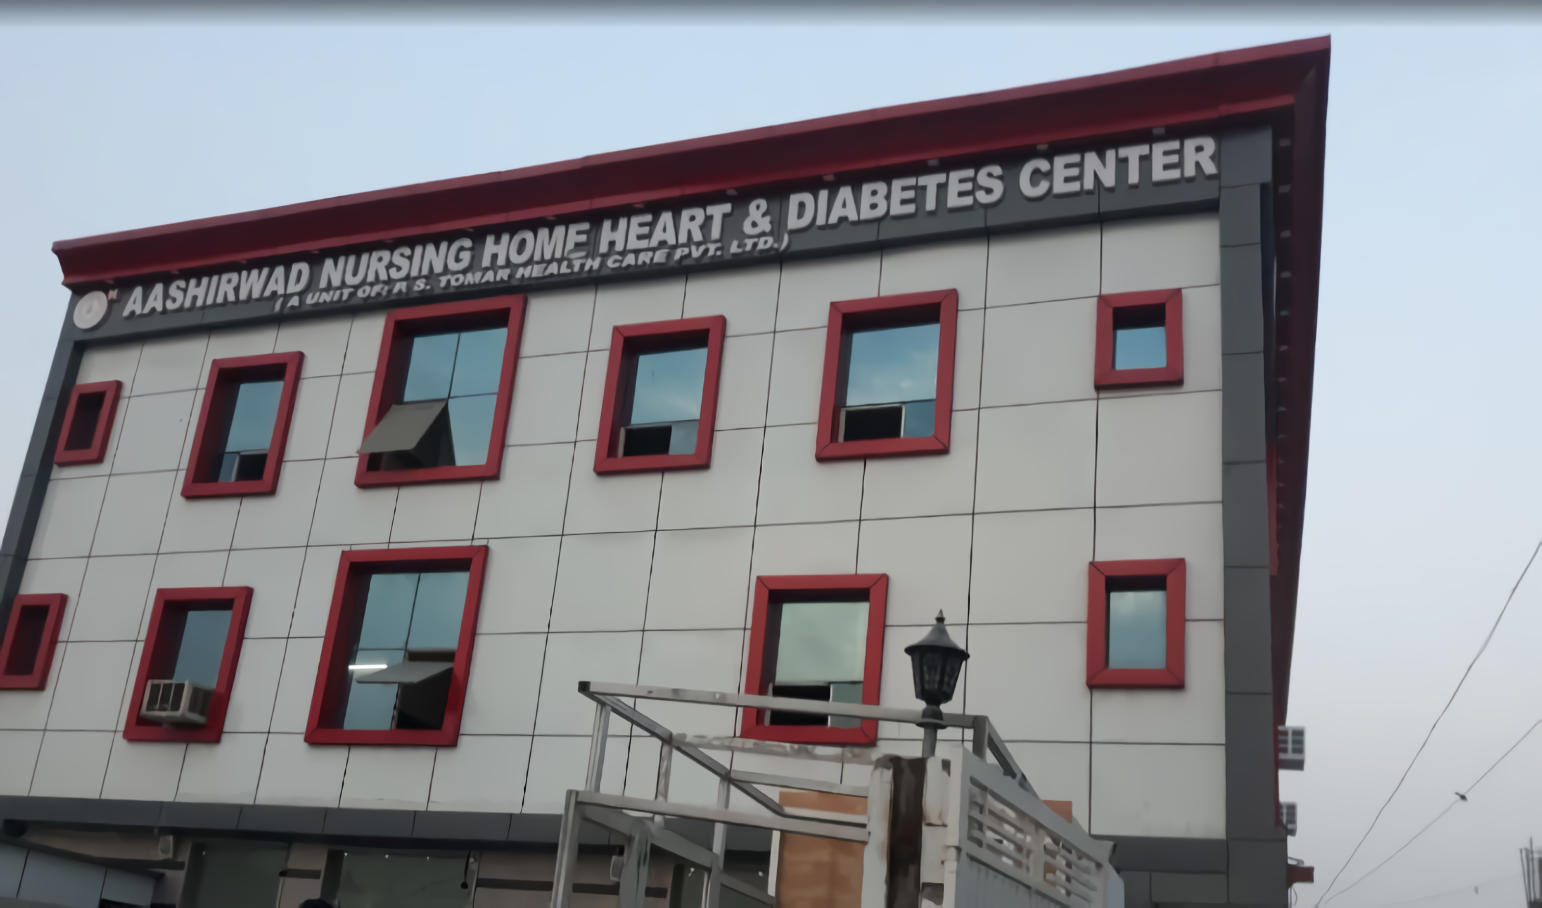 Aashirwad Nursing Home Heart & Diabetes Center photo